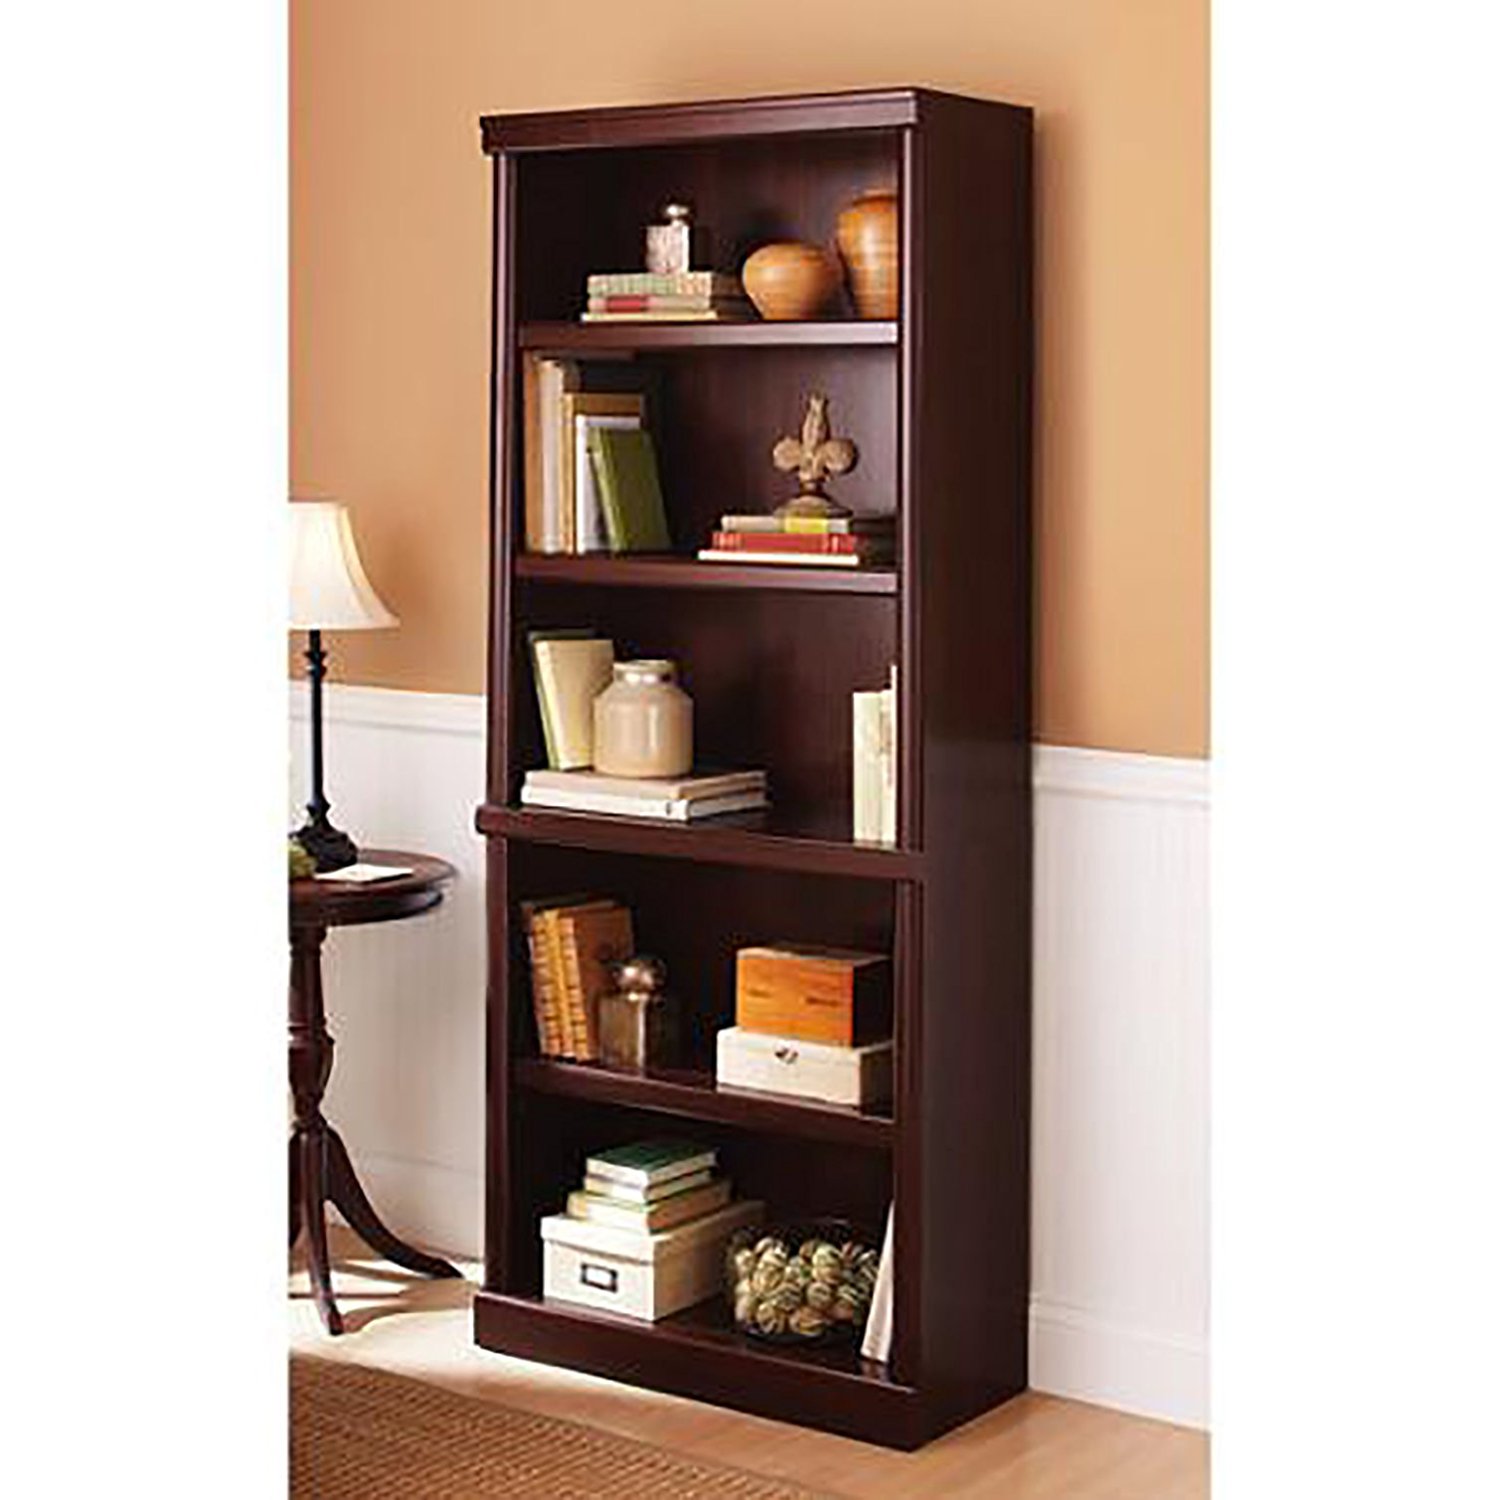 Amazon.com: 5 Shelf Cherry Bookcase Wooden Book Case Storage Shelves ...